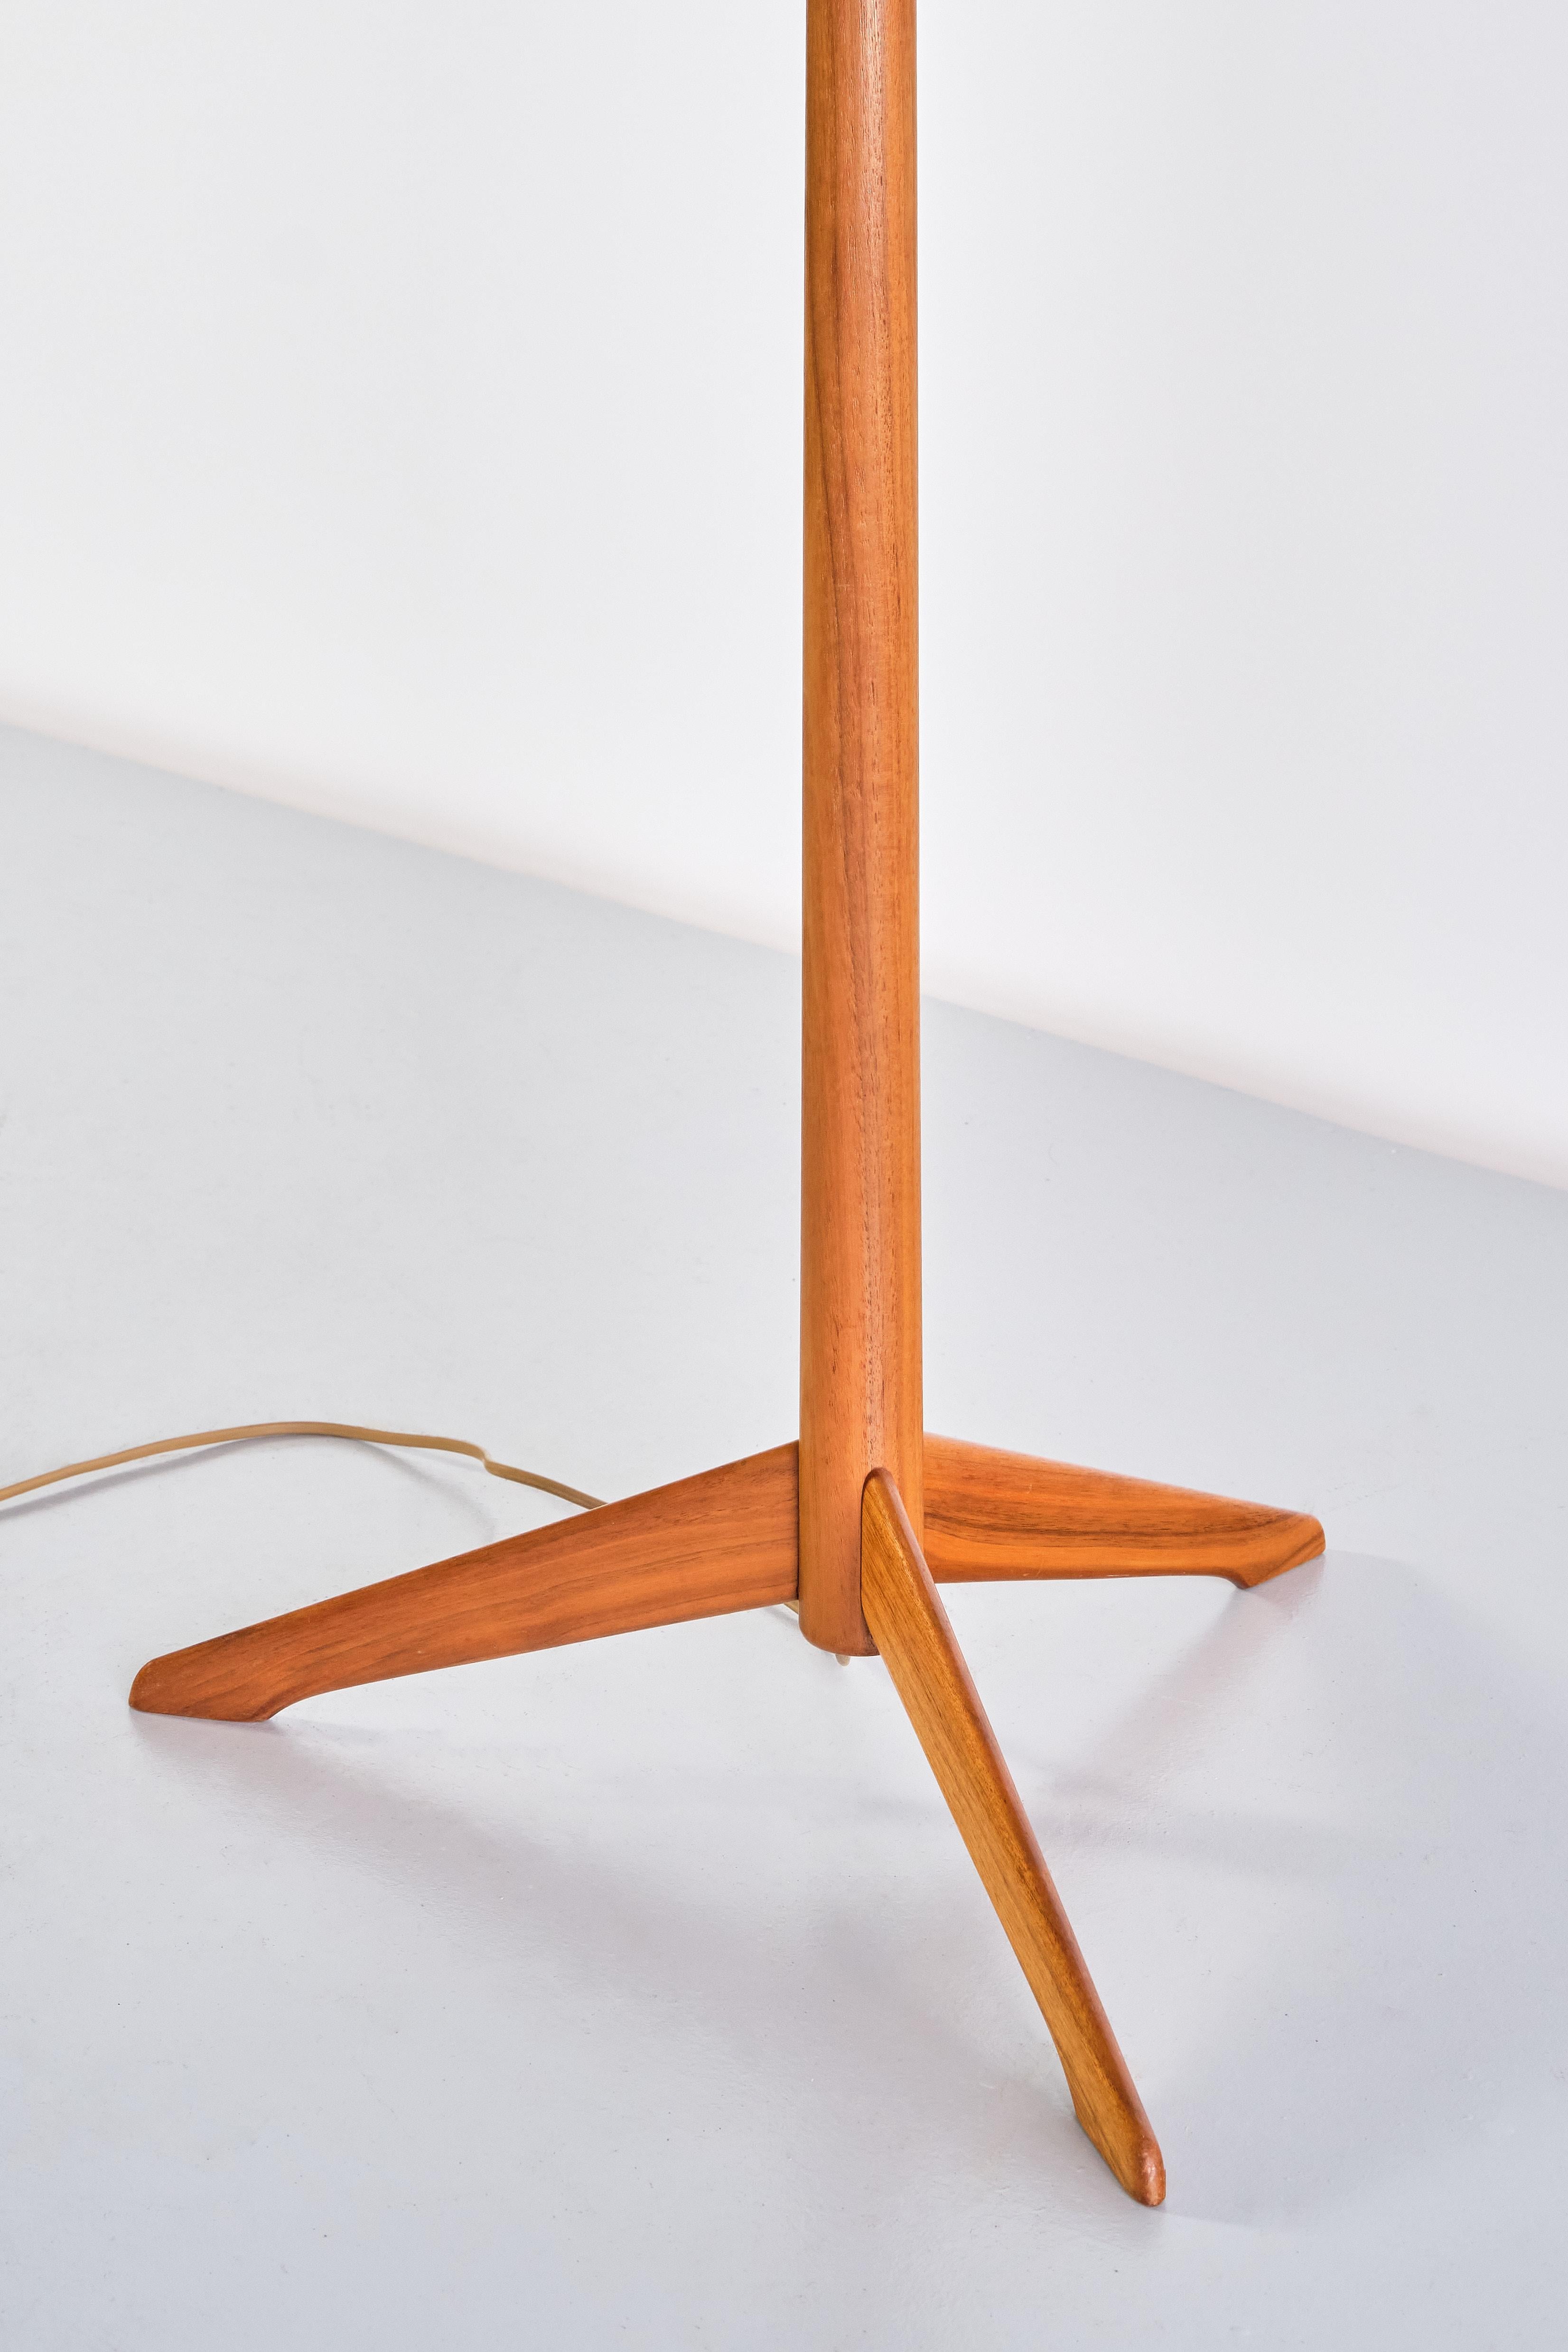 Alf Svensson G34 Floor Lamp in Teak, Josef Frank Shade, Bergboms, Sweden, 1960s For Sale 5